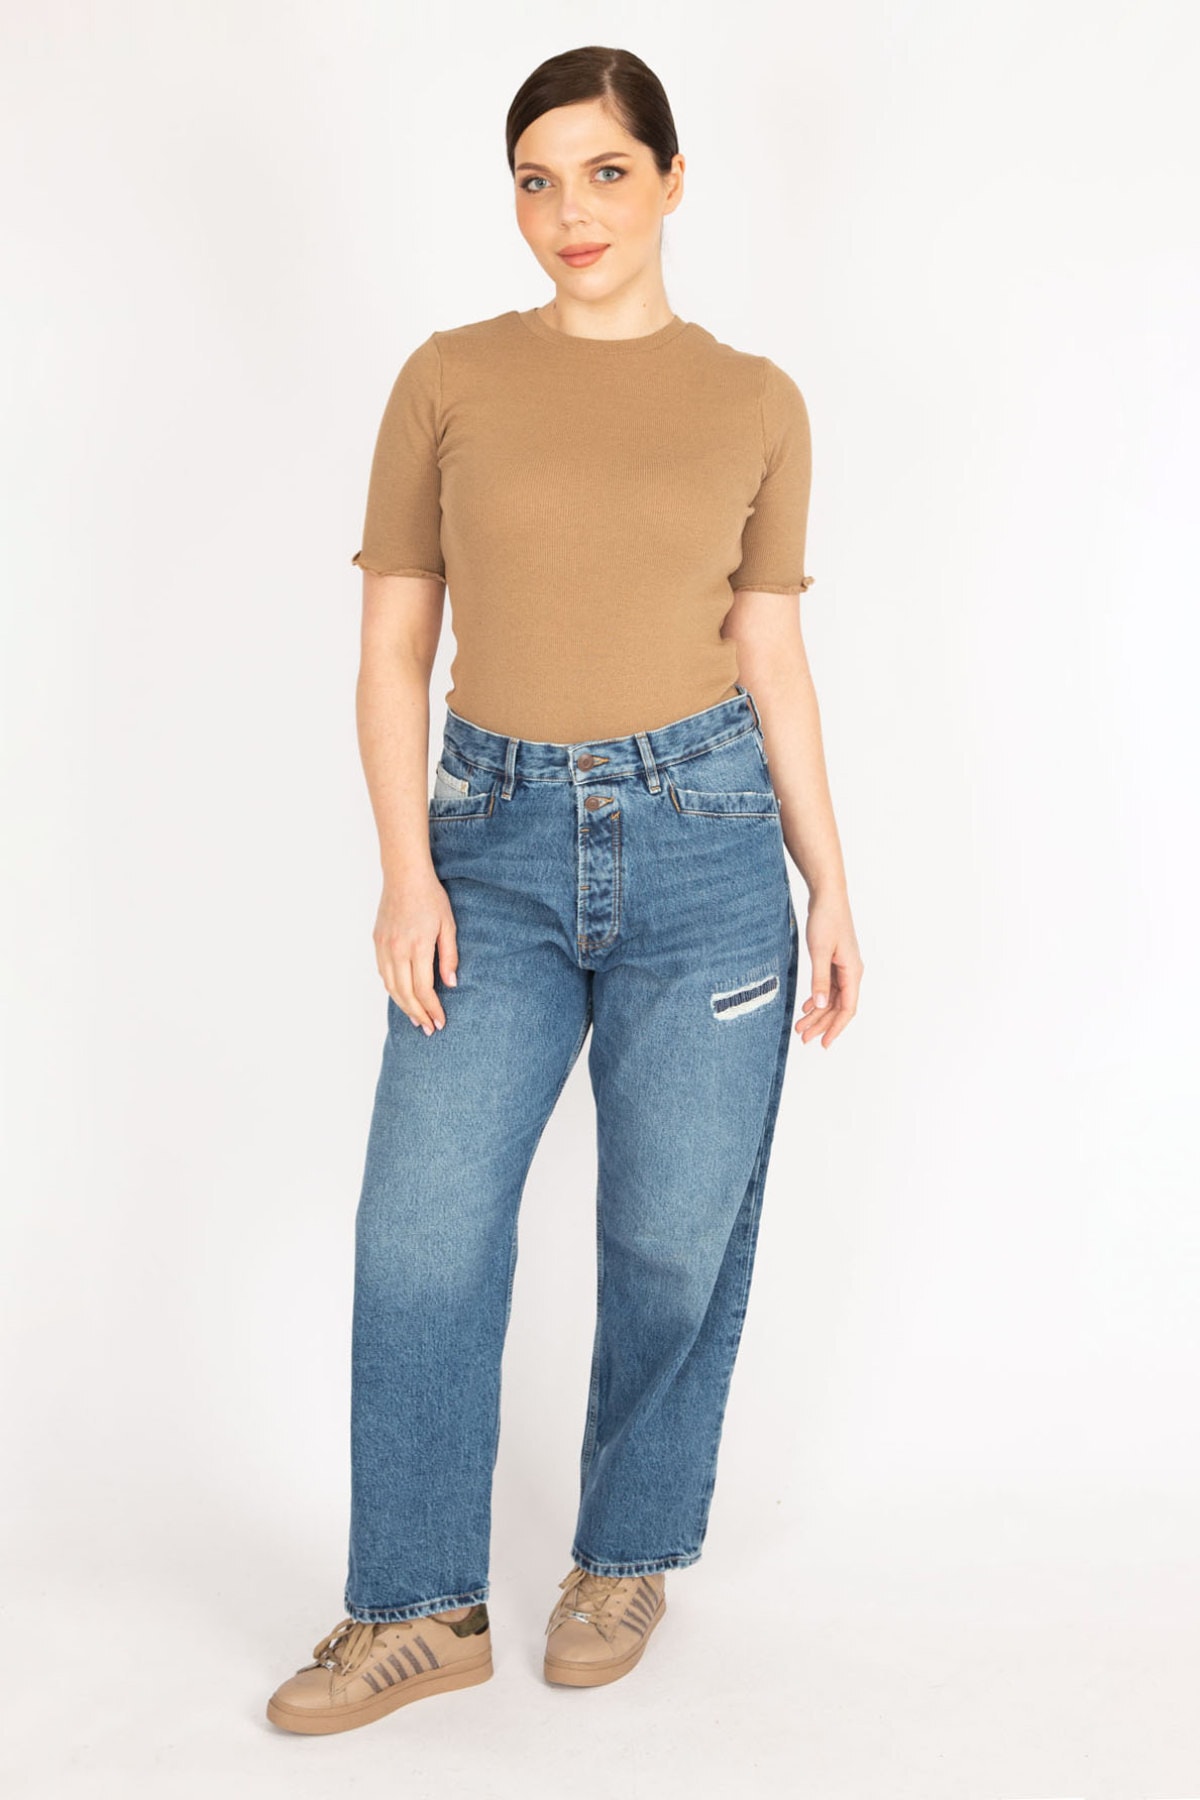 Şans Women's Blue Plus Size Ripped Detailed High Waist Front Buttoned Jeans.